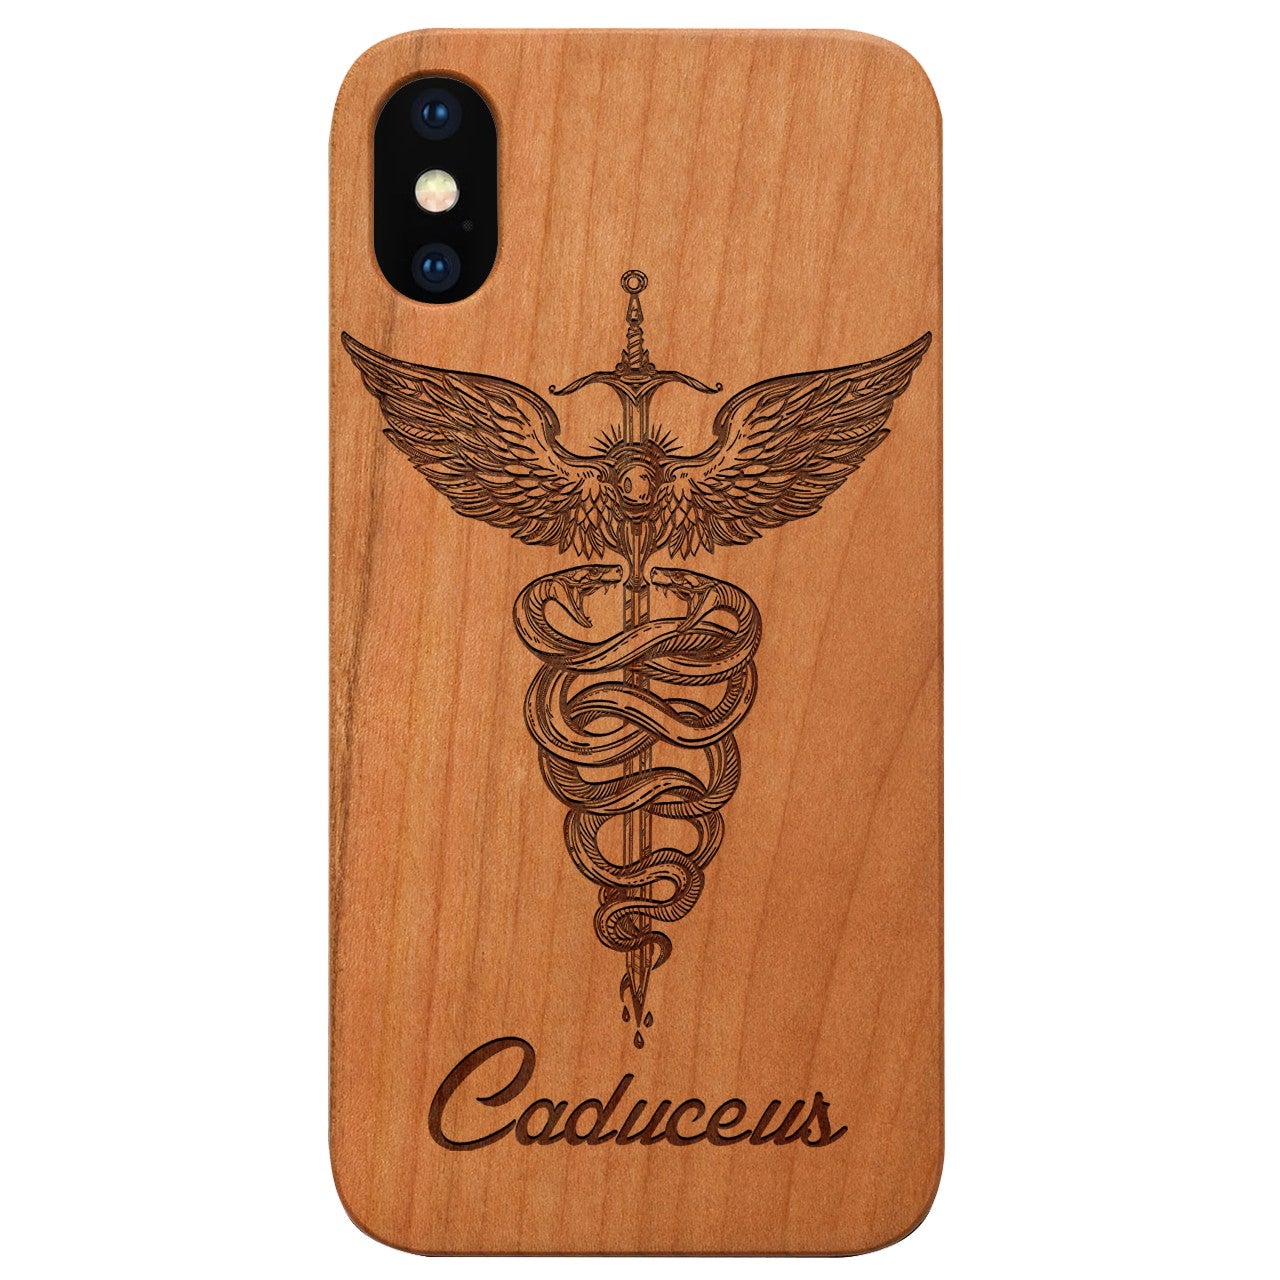  Caduceus - Engraved - Wooden Phone Case - IPhone 13 Models